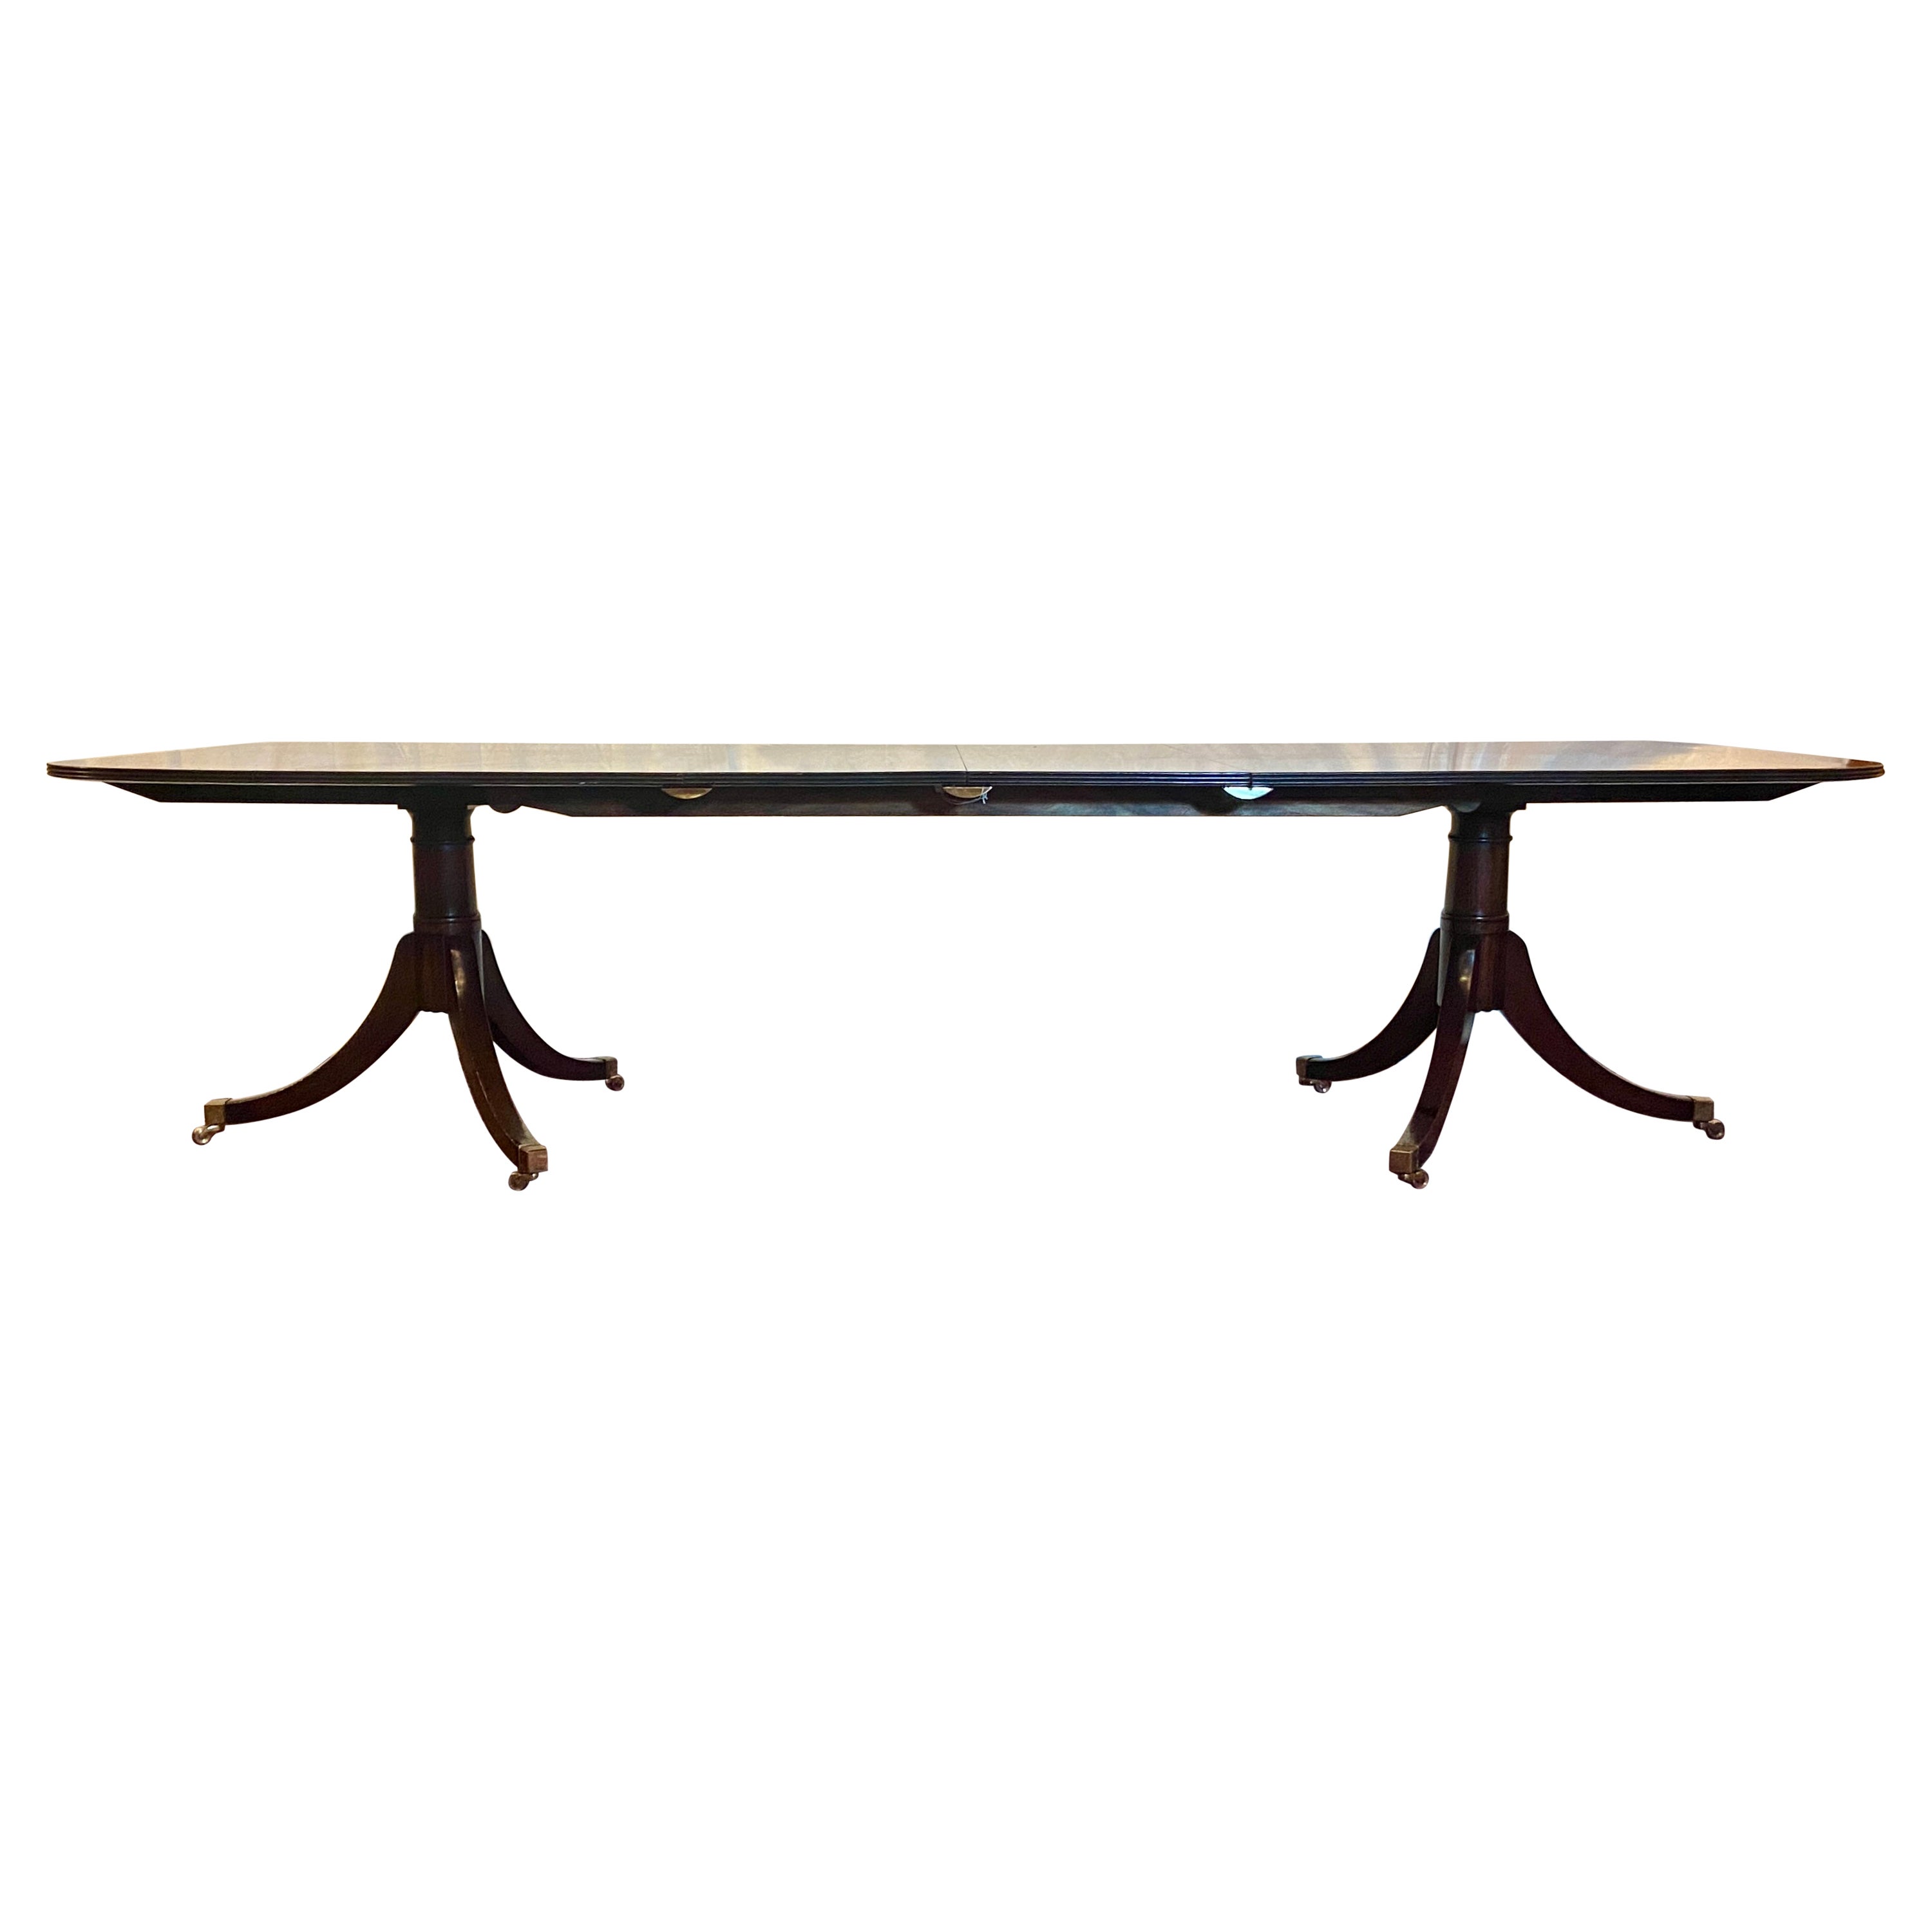 Antique English Mahogany Two-Pedestal Dining Table, Circa 1900